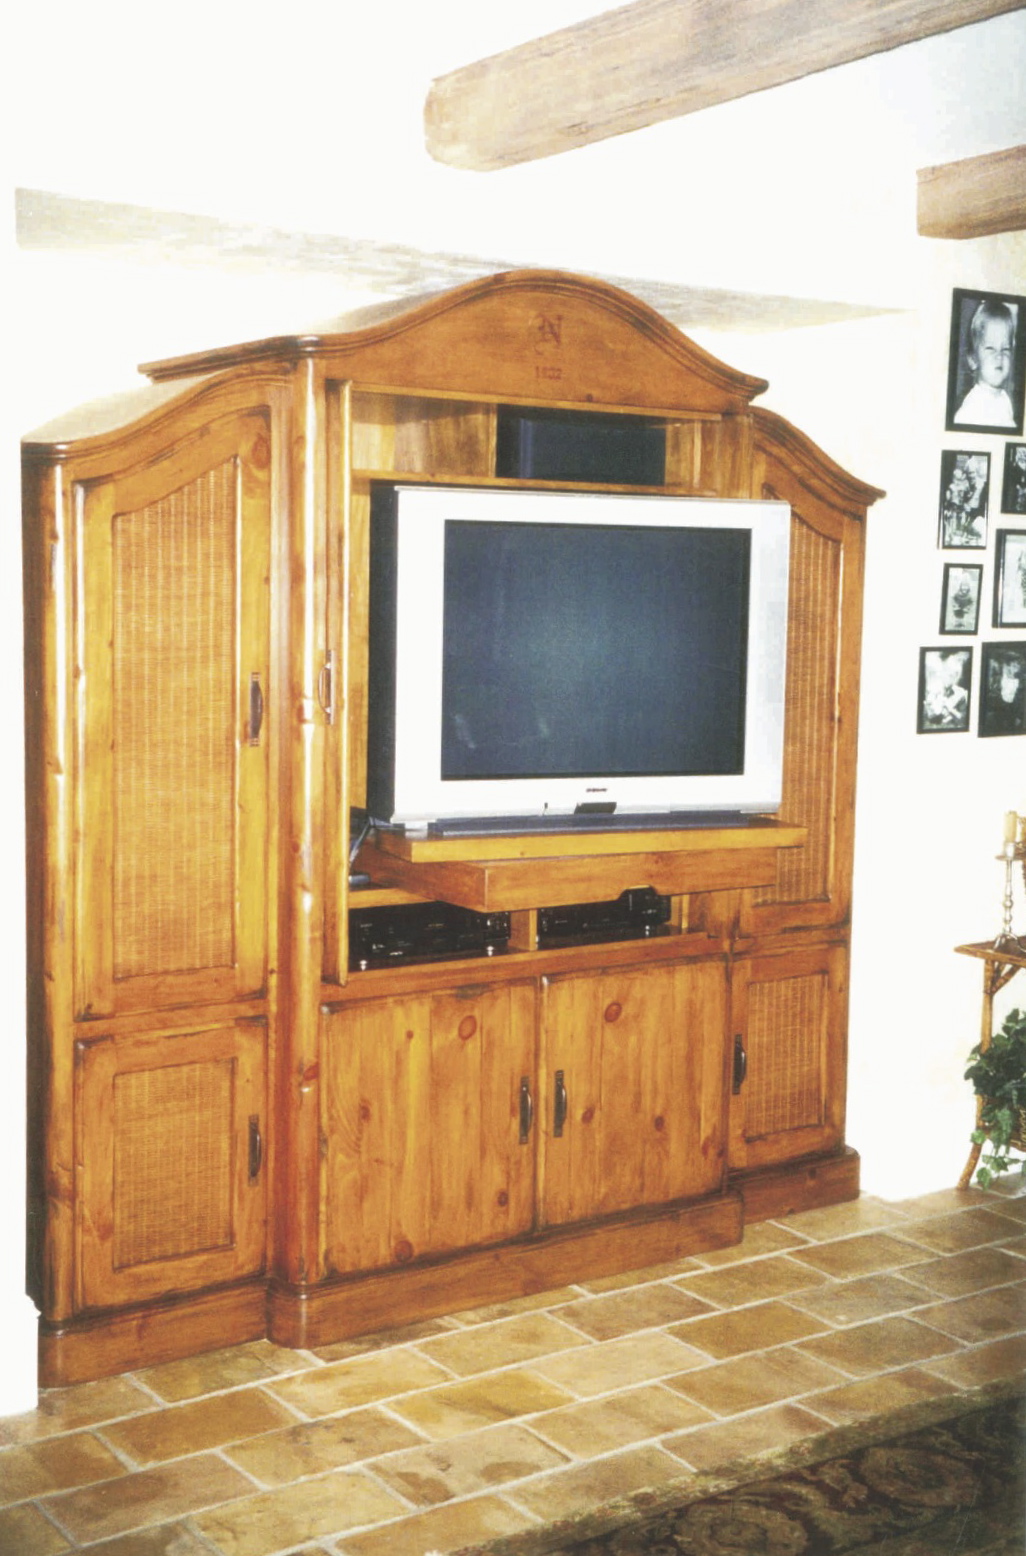 Armoire type TV/AV, storage, dining area cabinet - Jupiter Island